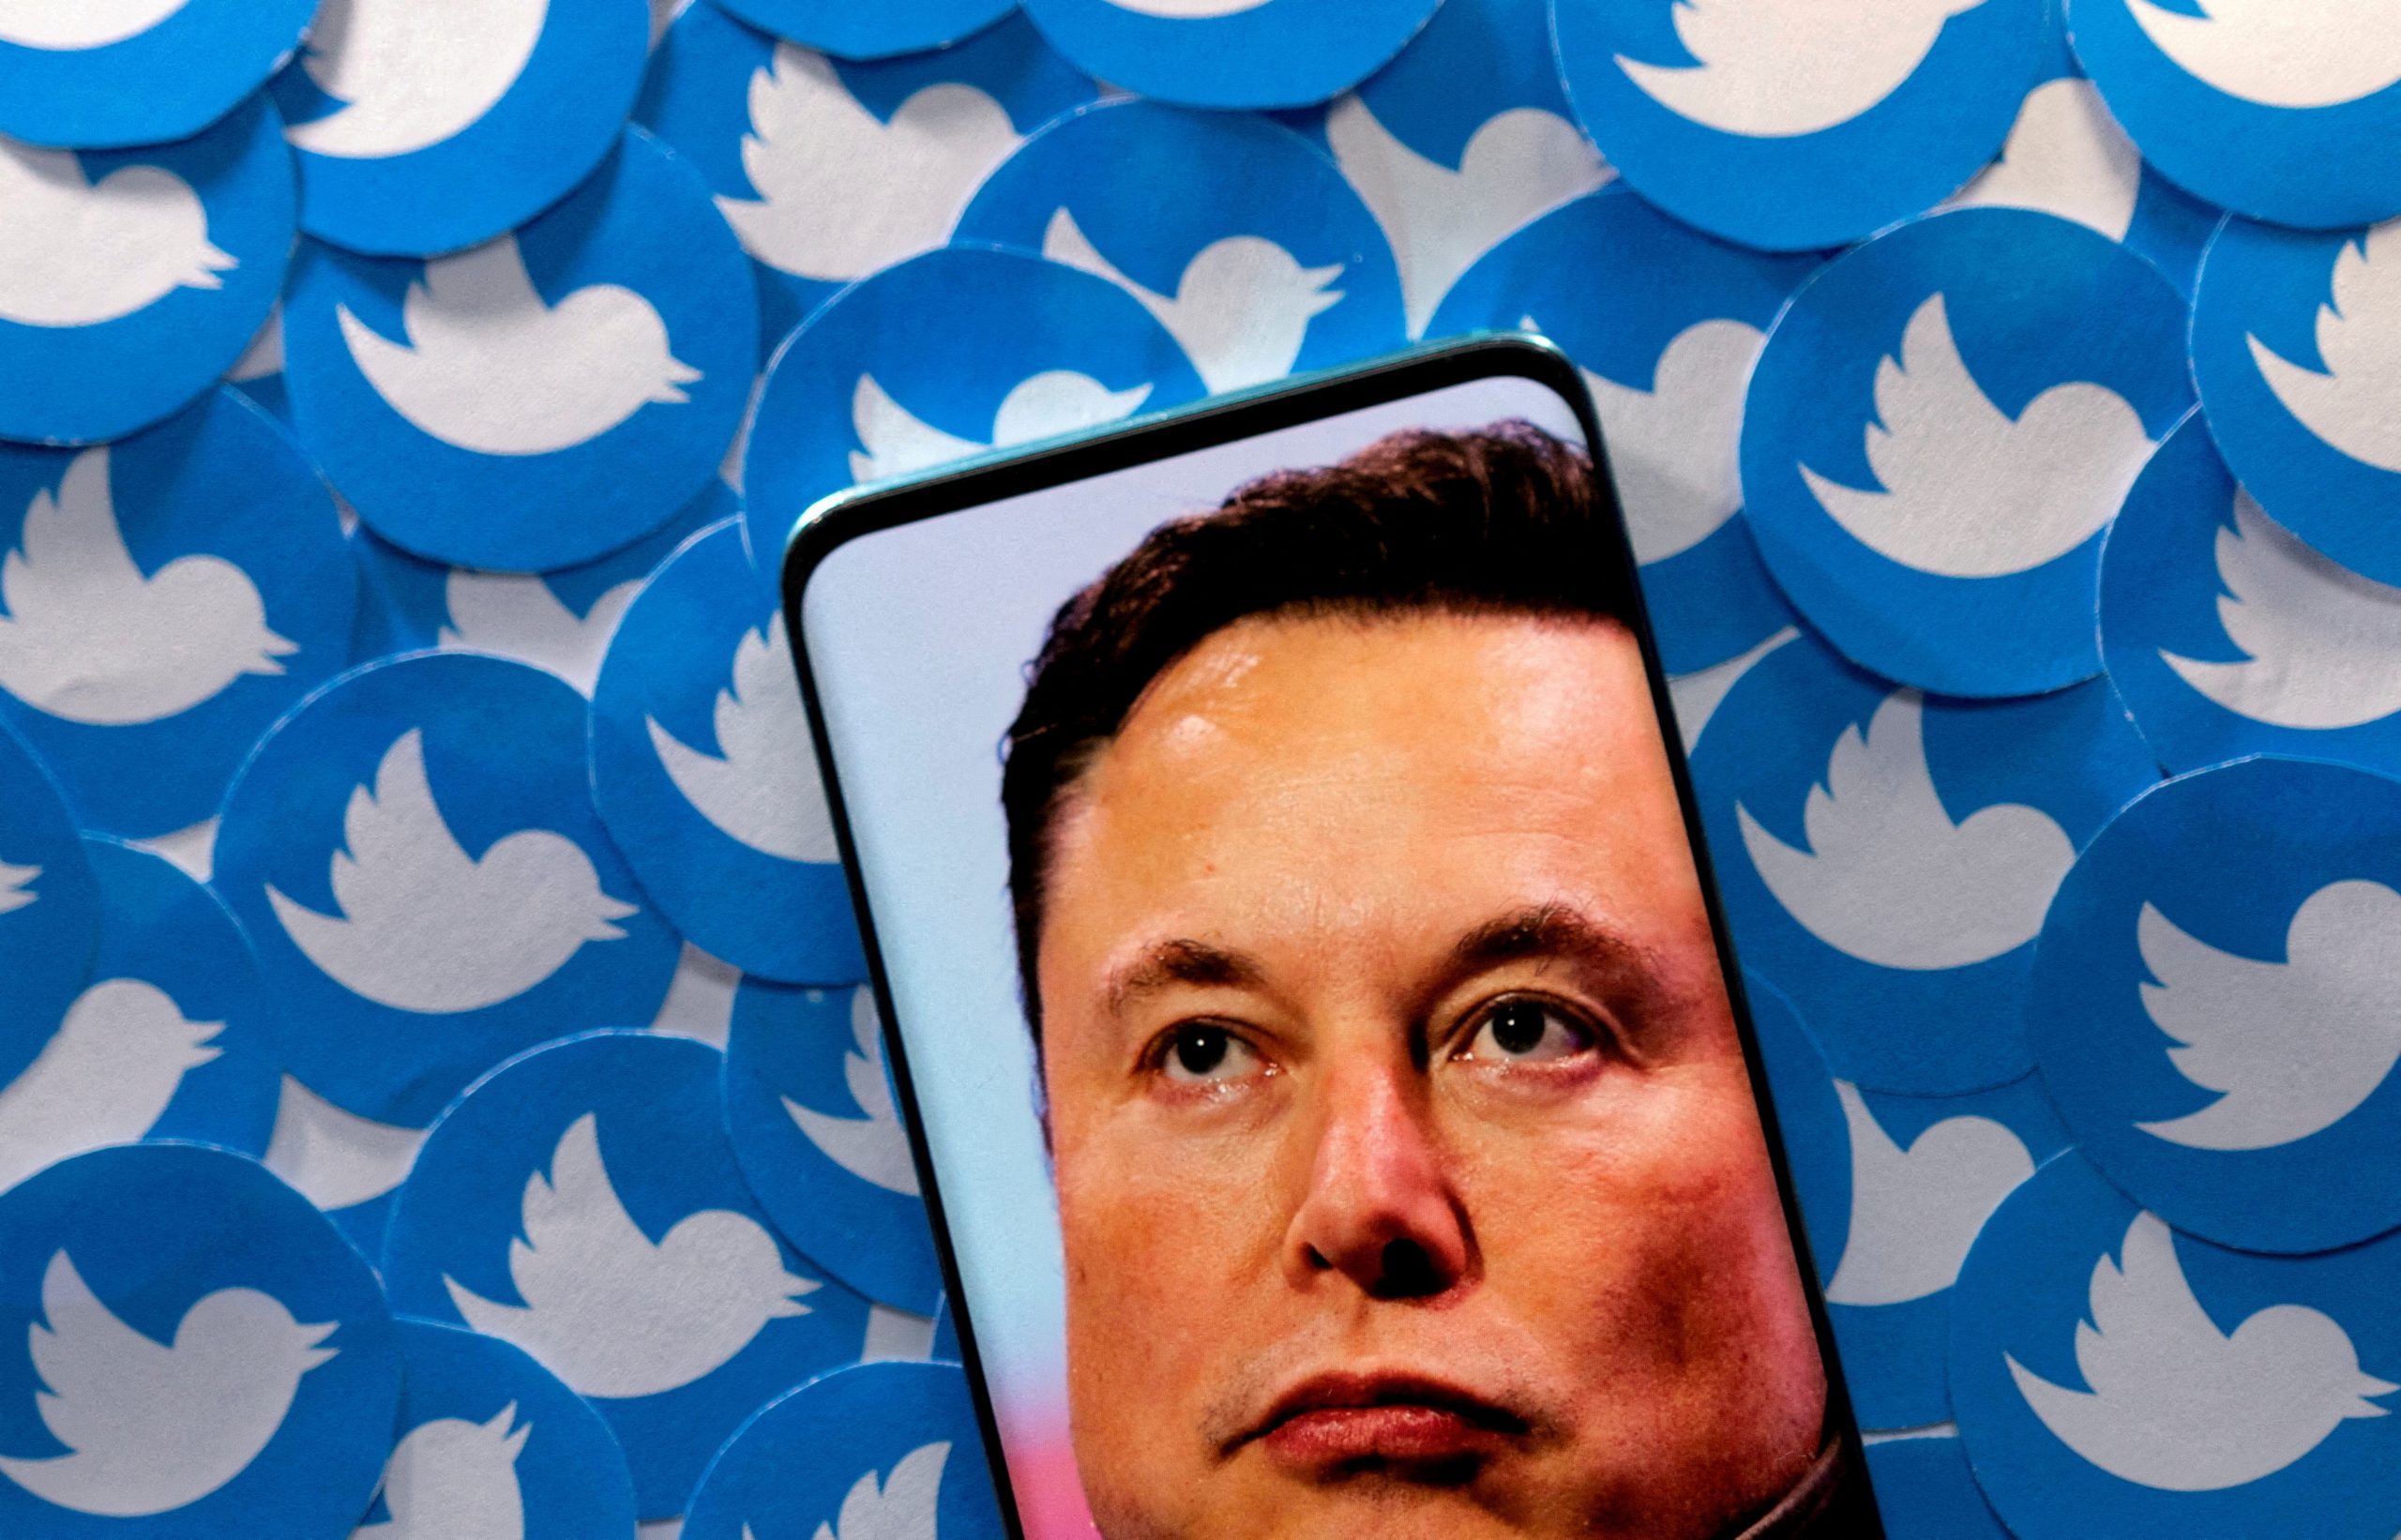 New Lawsuit Accuses Elon Musk, Twitter of Gender Discrimination